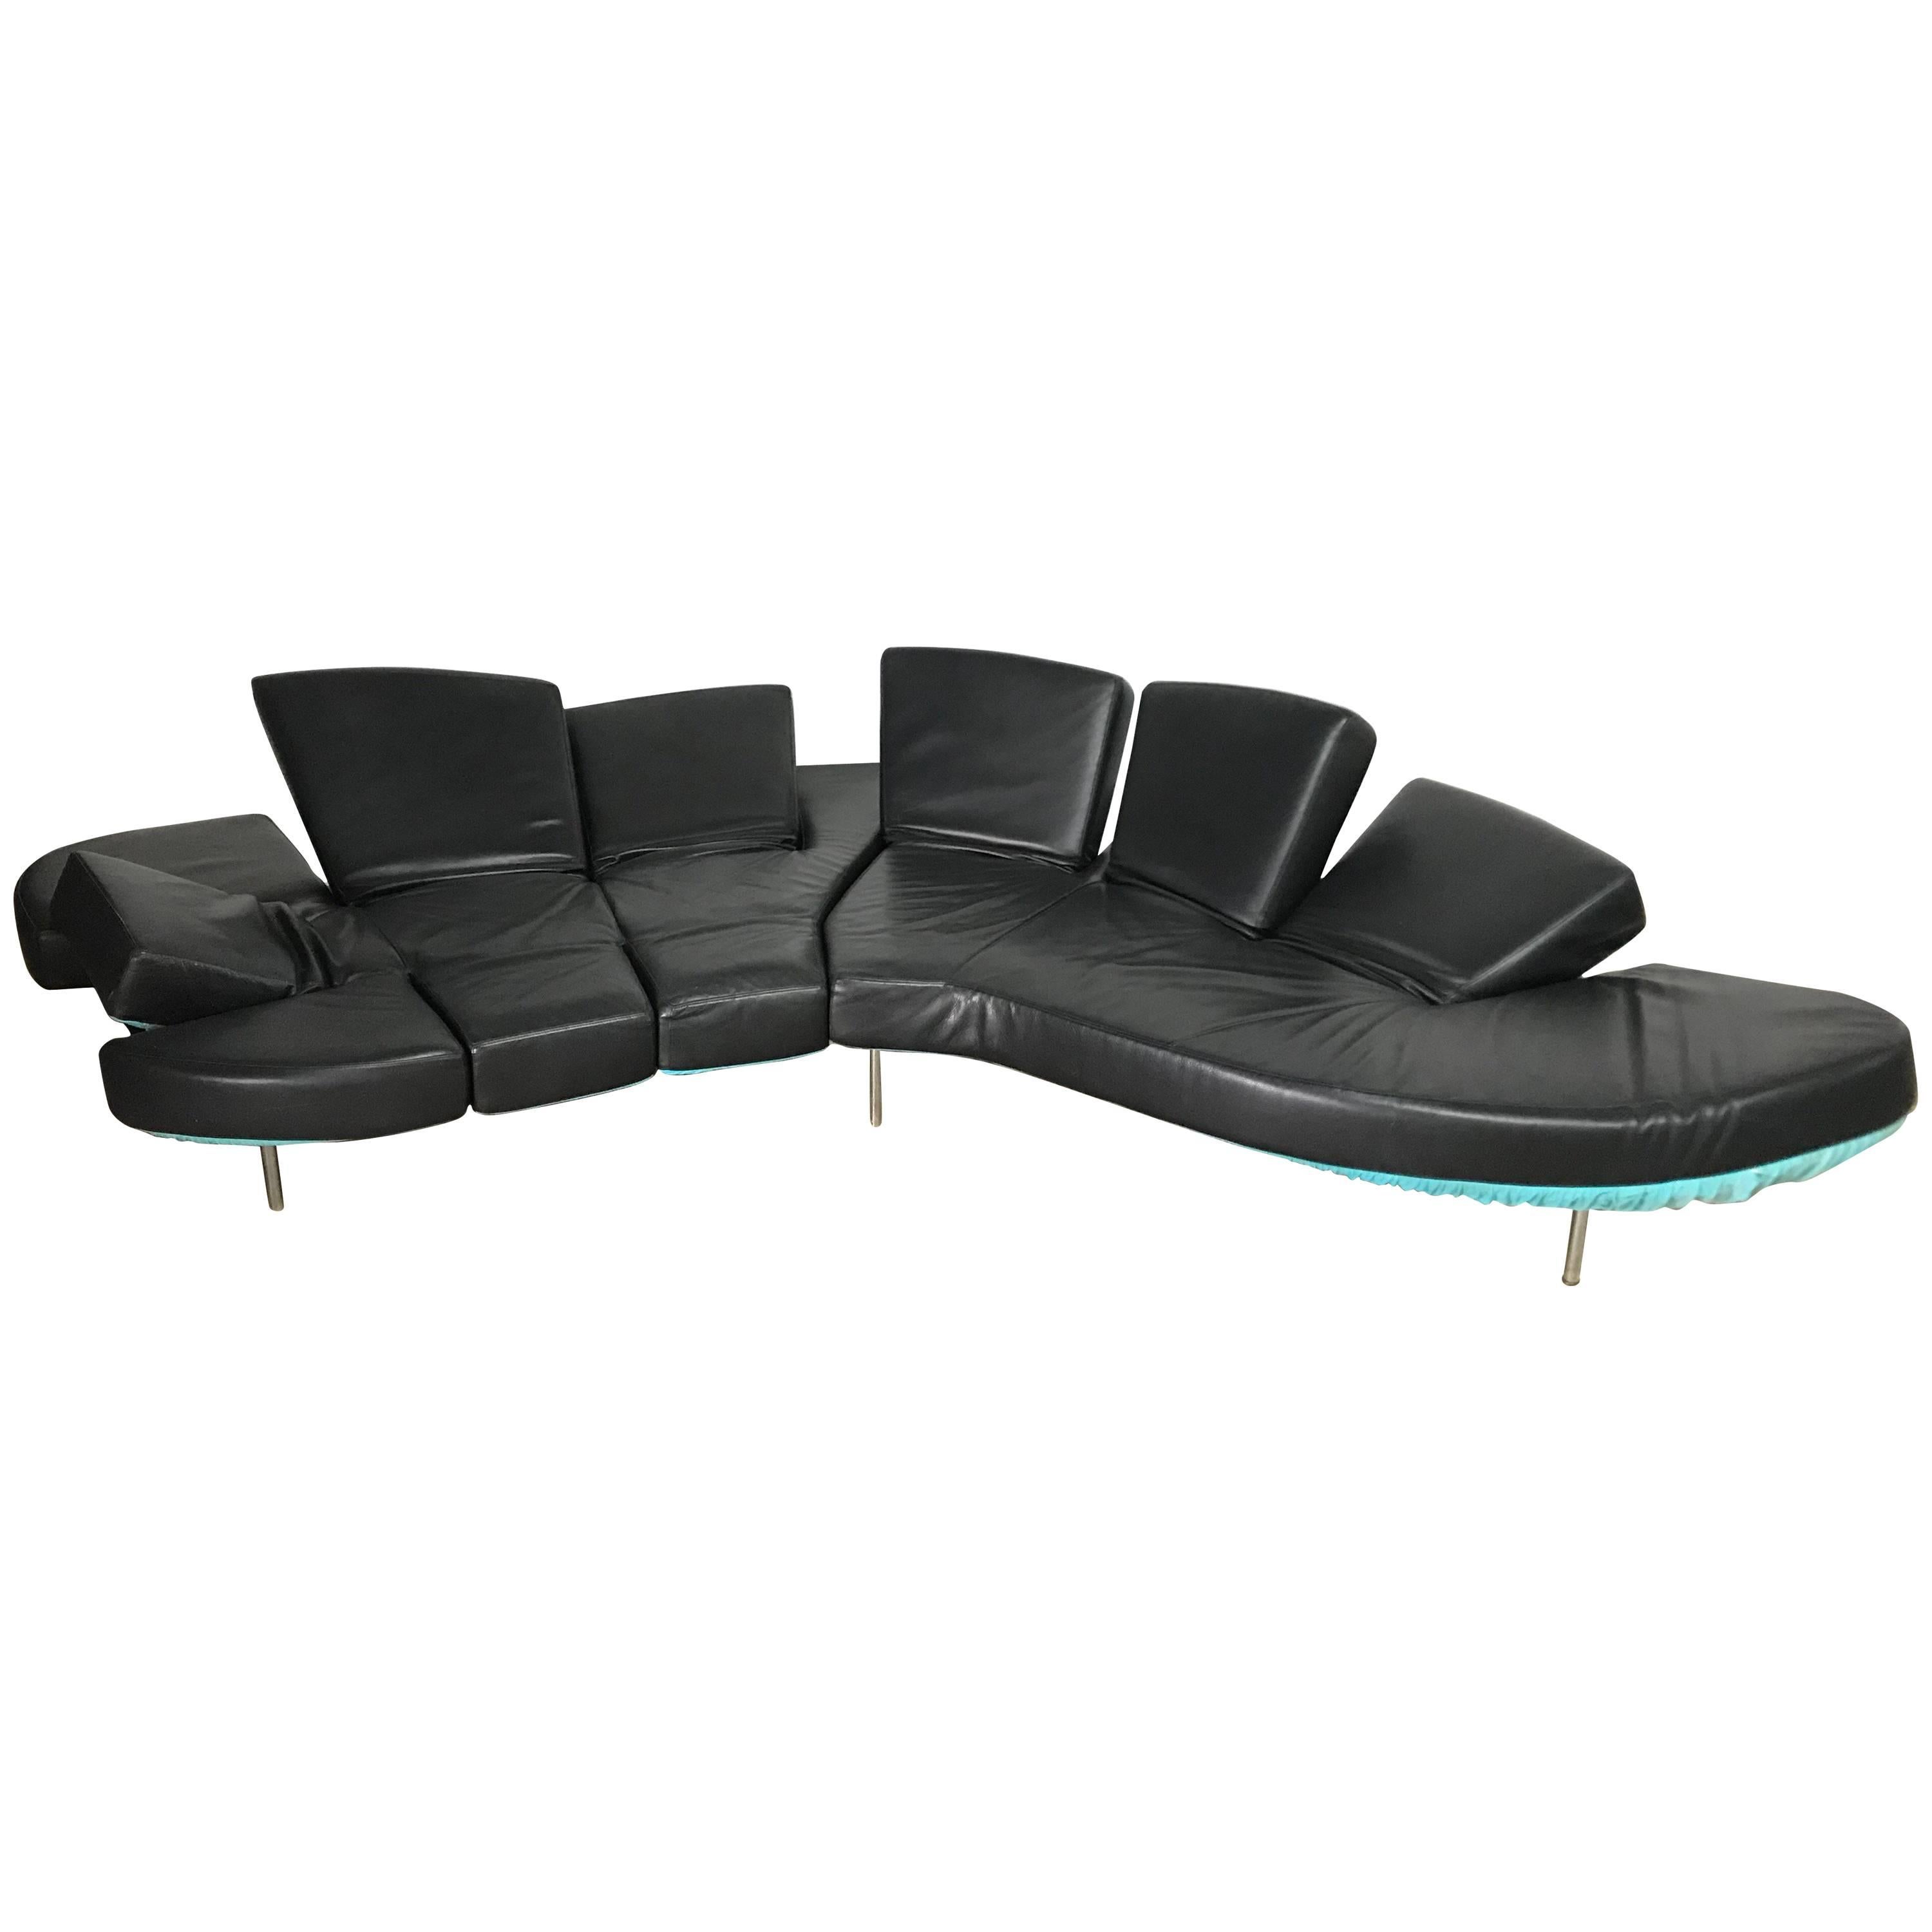 Black Leather "Flap" Sofa by Francesco Binfare for Edra